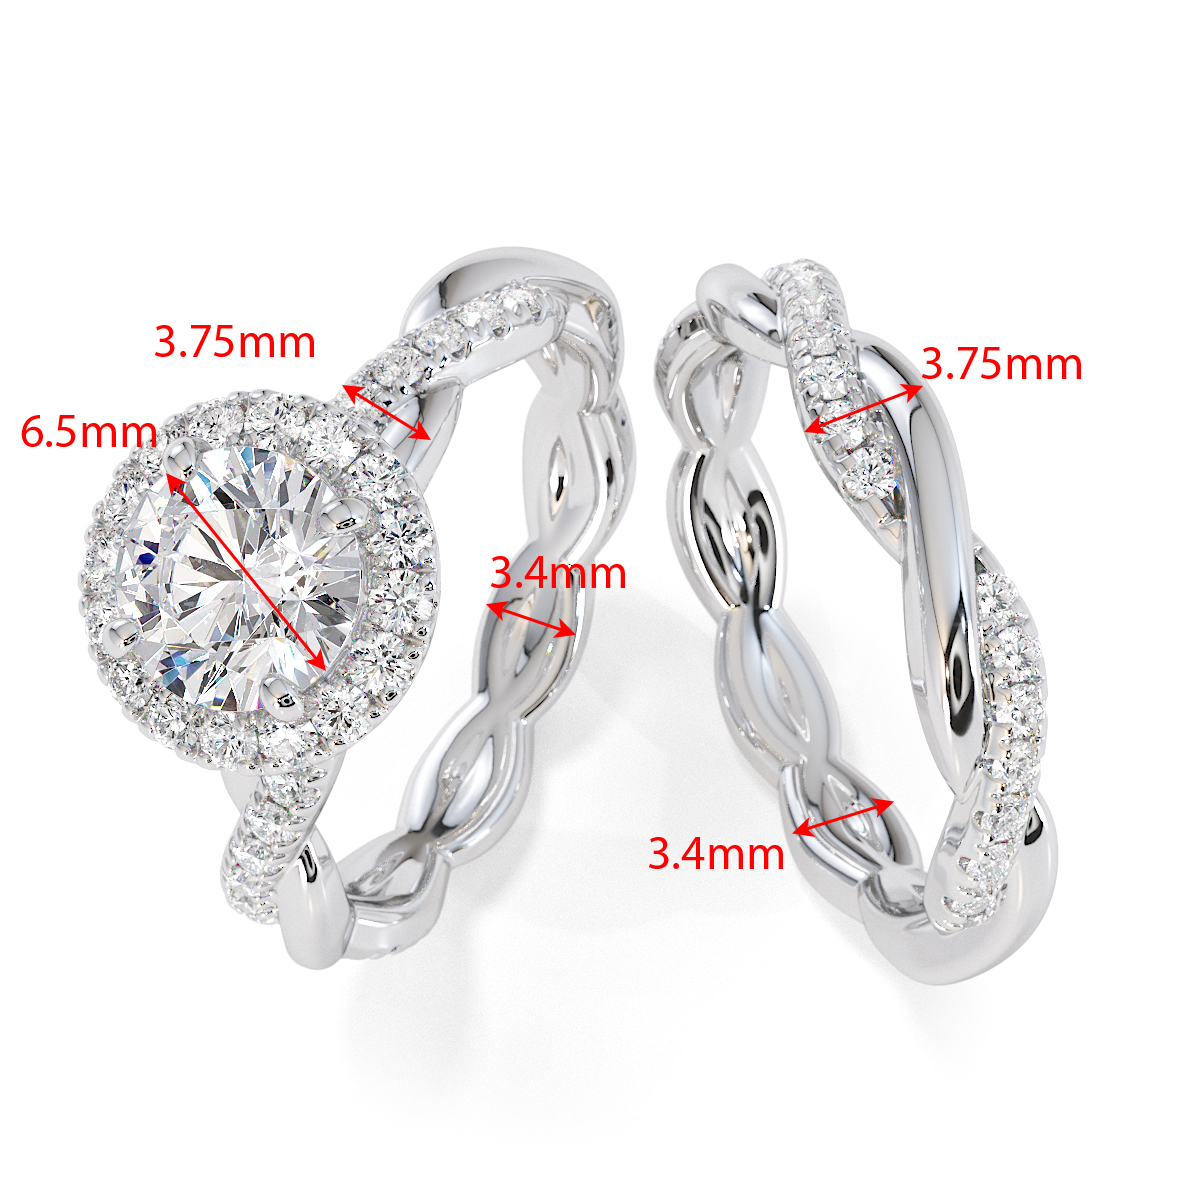 Gold / Platinum Yellow Sapphire and Diamond Engagement Ring RZ3453